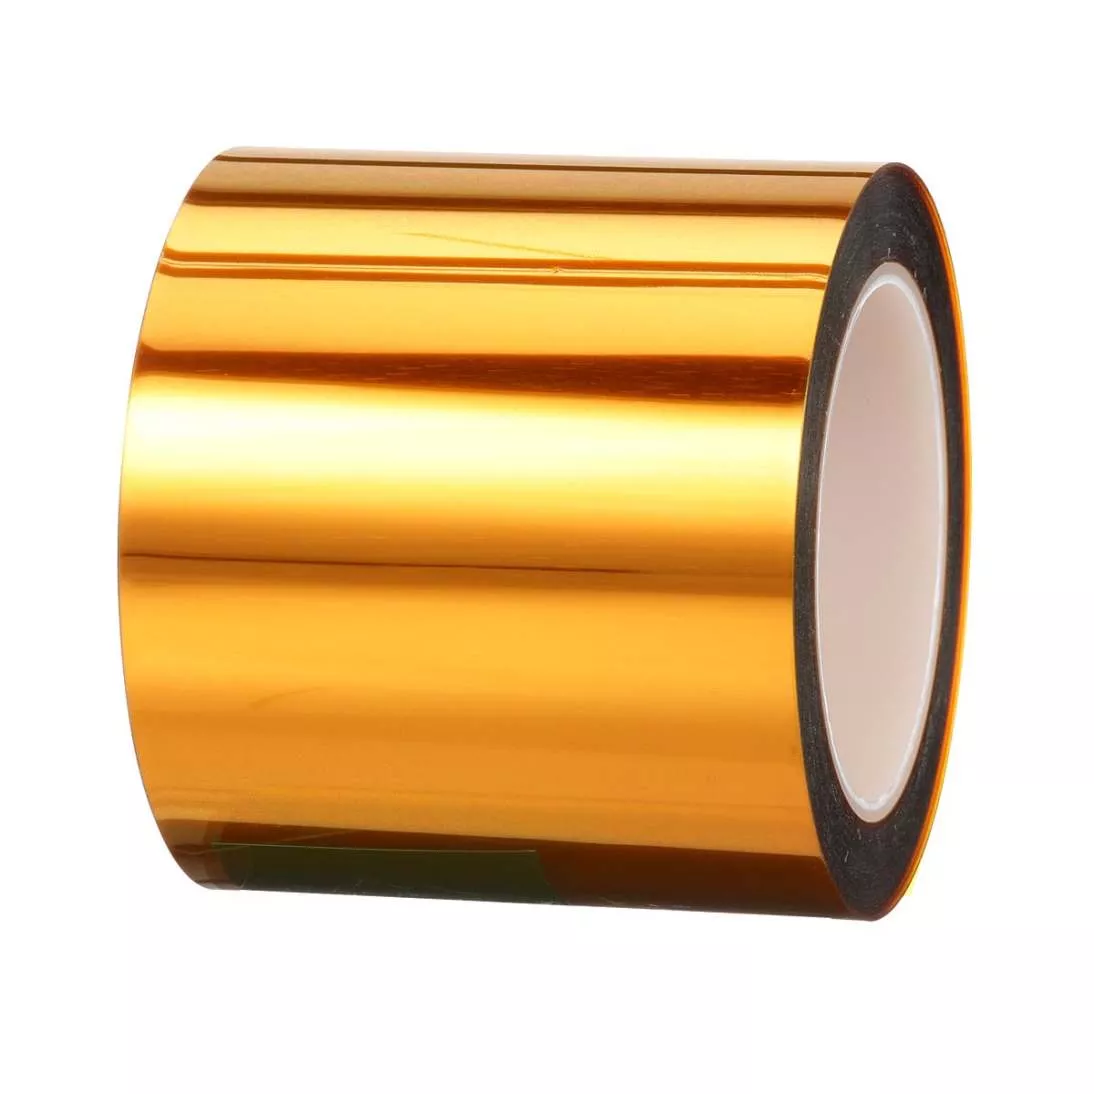 3M™ Polyimide Tape 8997L, Light Amber, 4 in x 36 yd, 2.2 mil, 8 rolls
per case